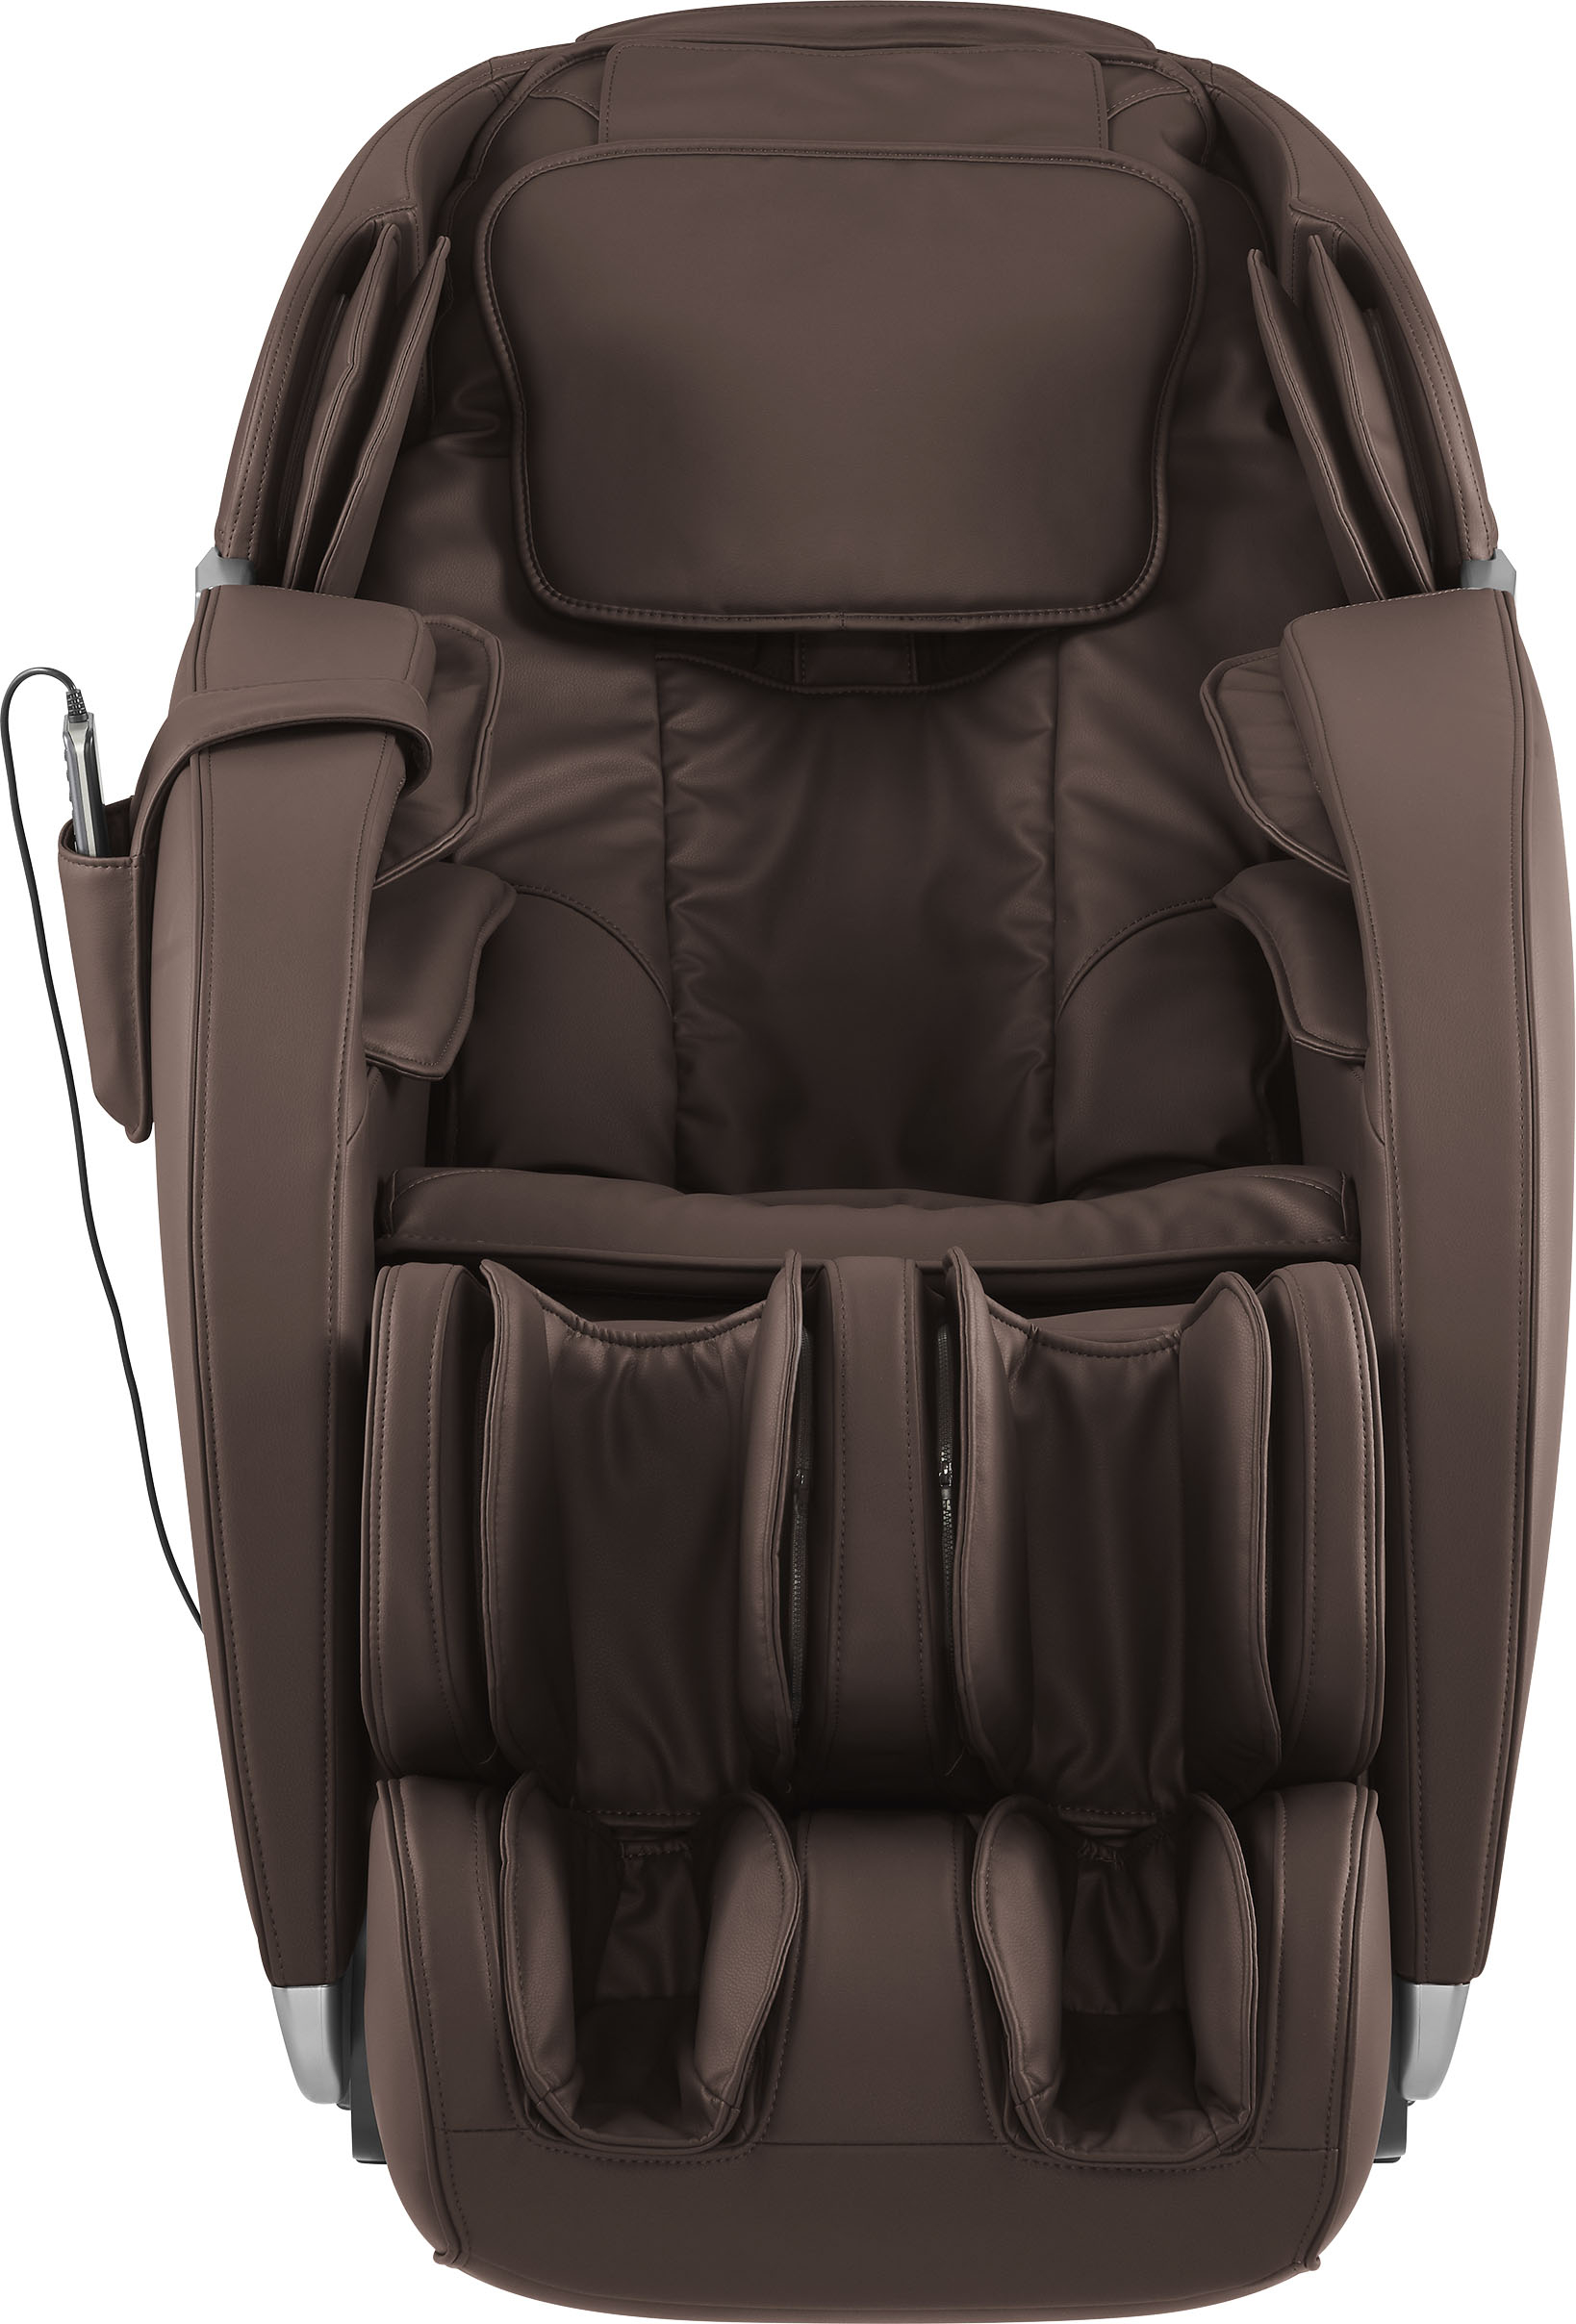 Insignia™ 3D Zero Gravity Full Body Massage Chair Black NS-MGC600BK2 - Best  Buy